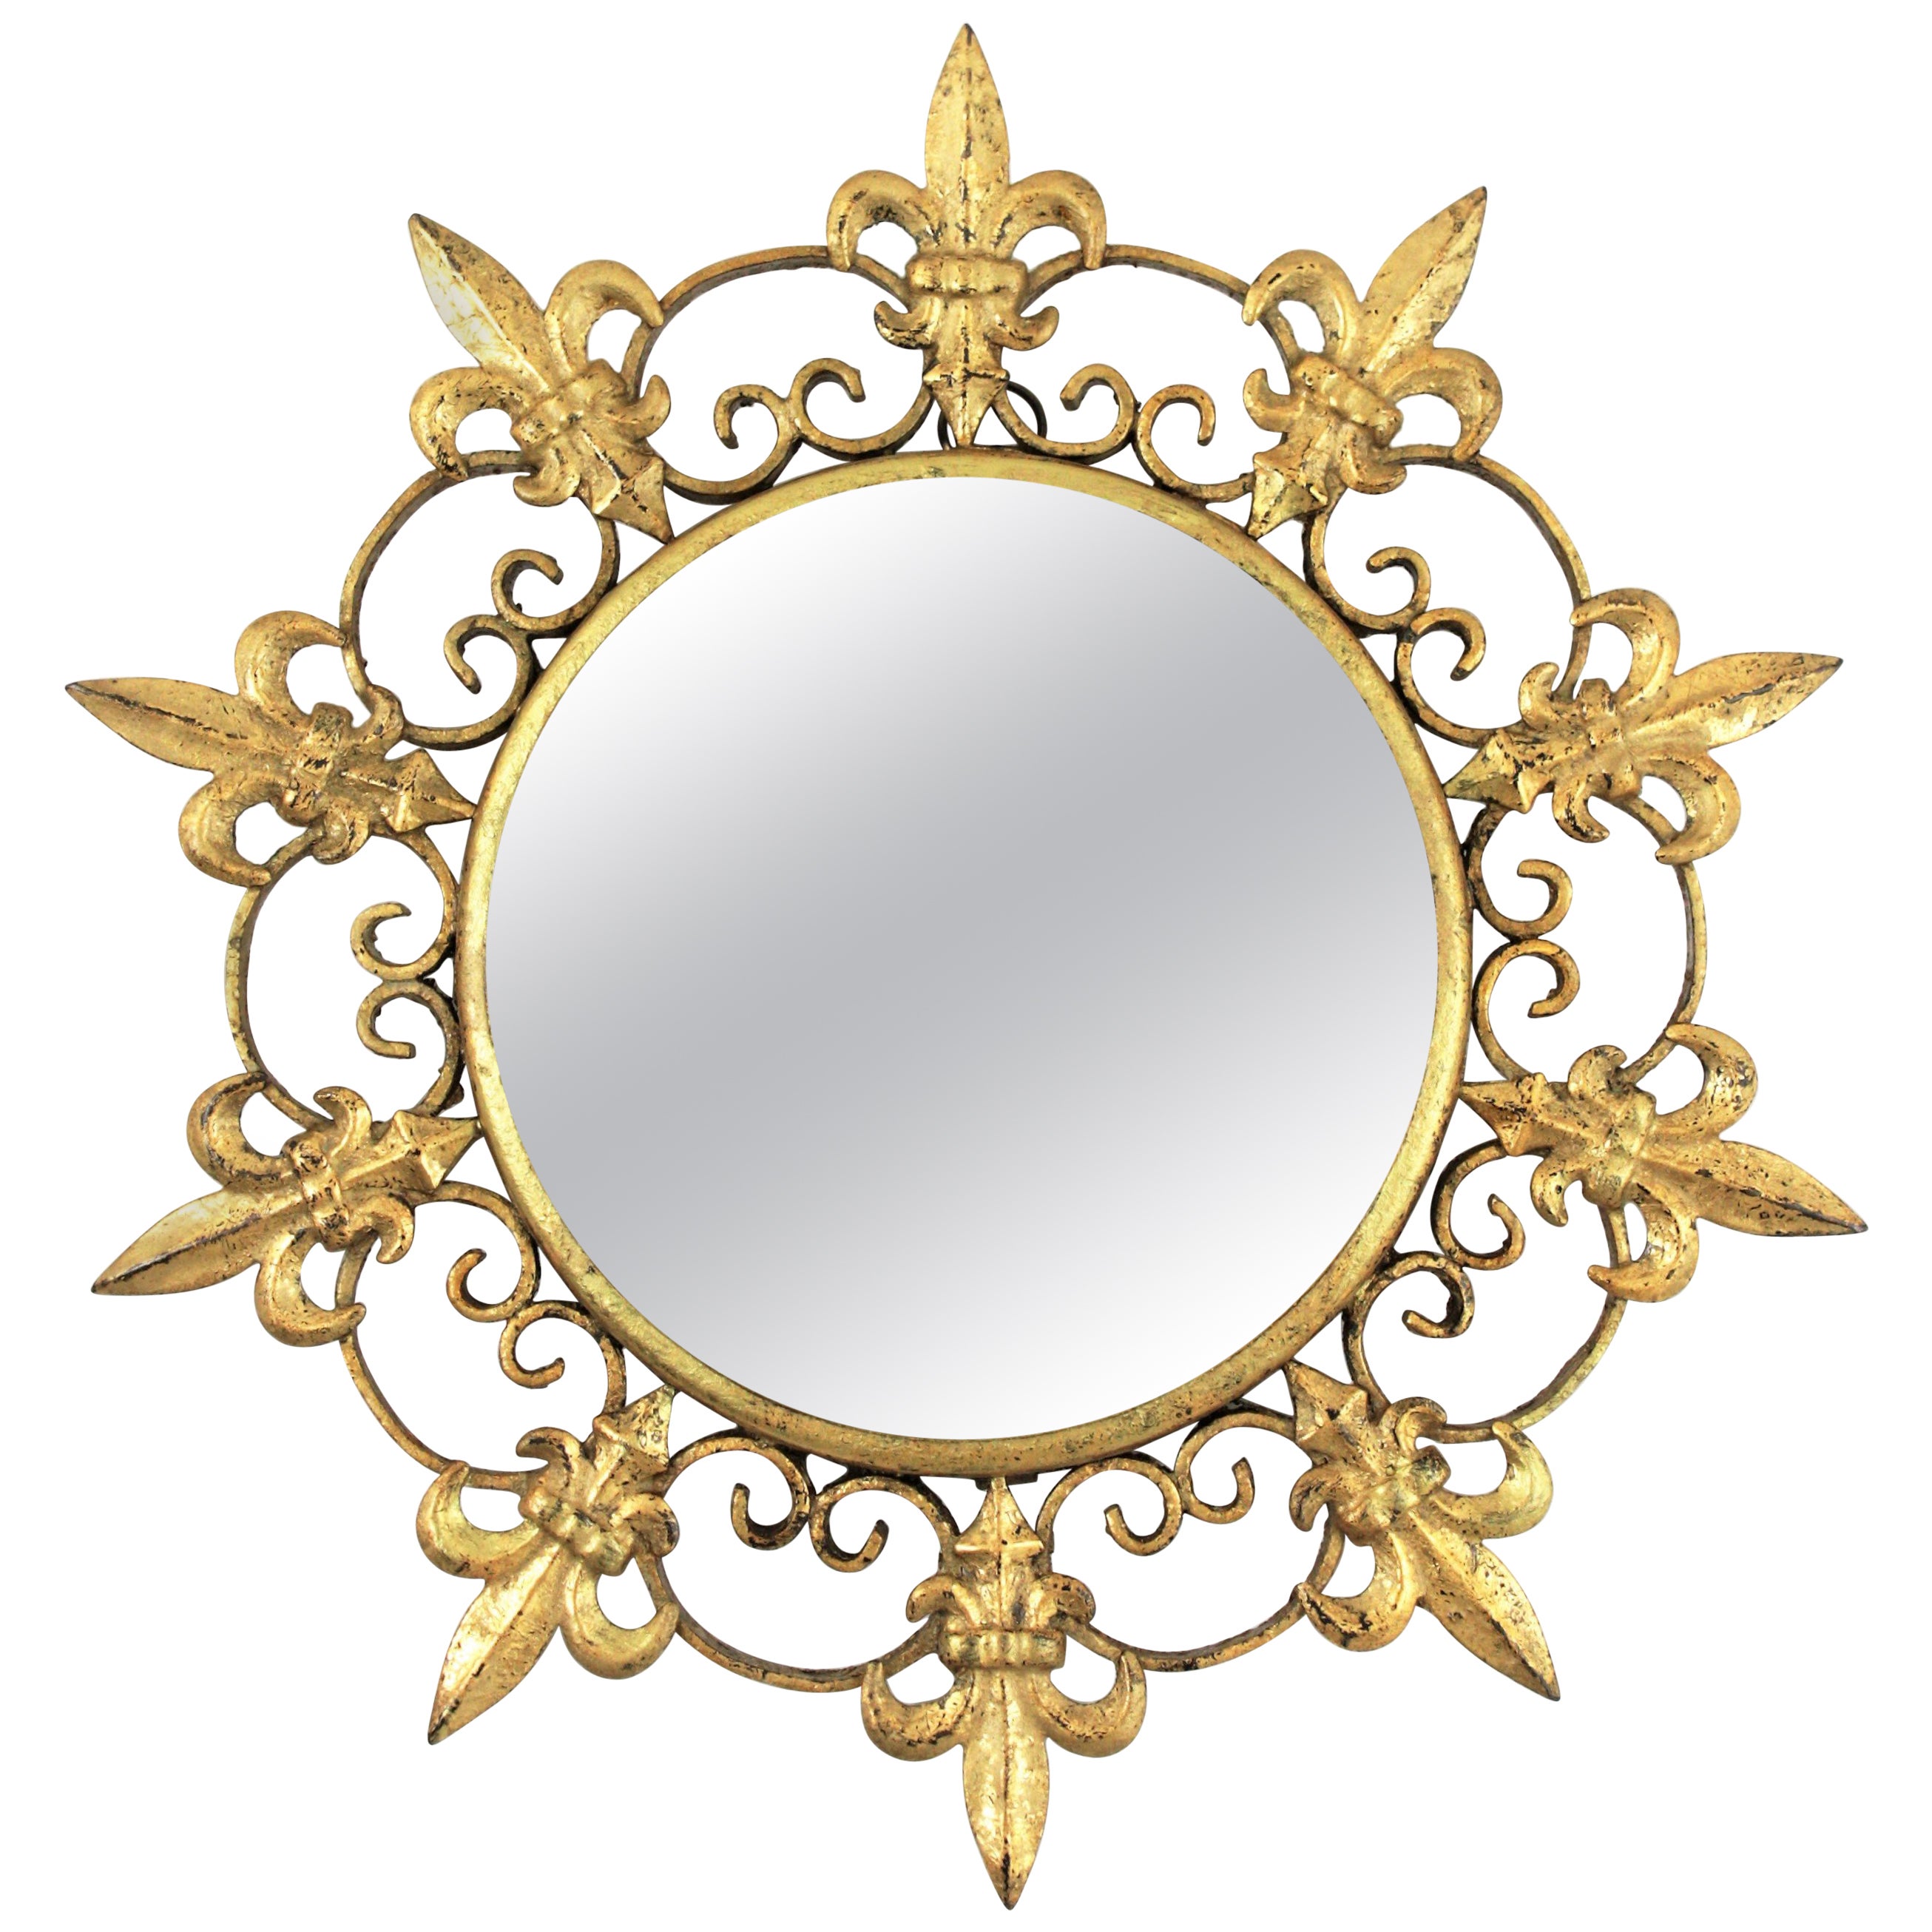 Gilt Sunburst Mirror in Small Scale, Fleur de Lys Design For Sale